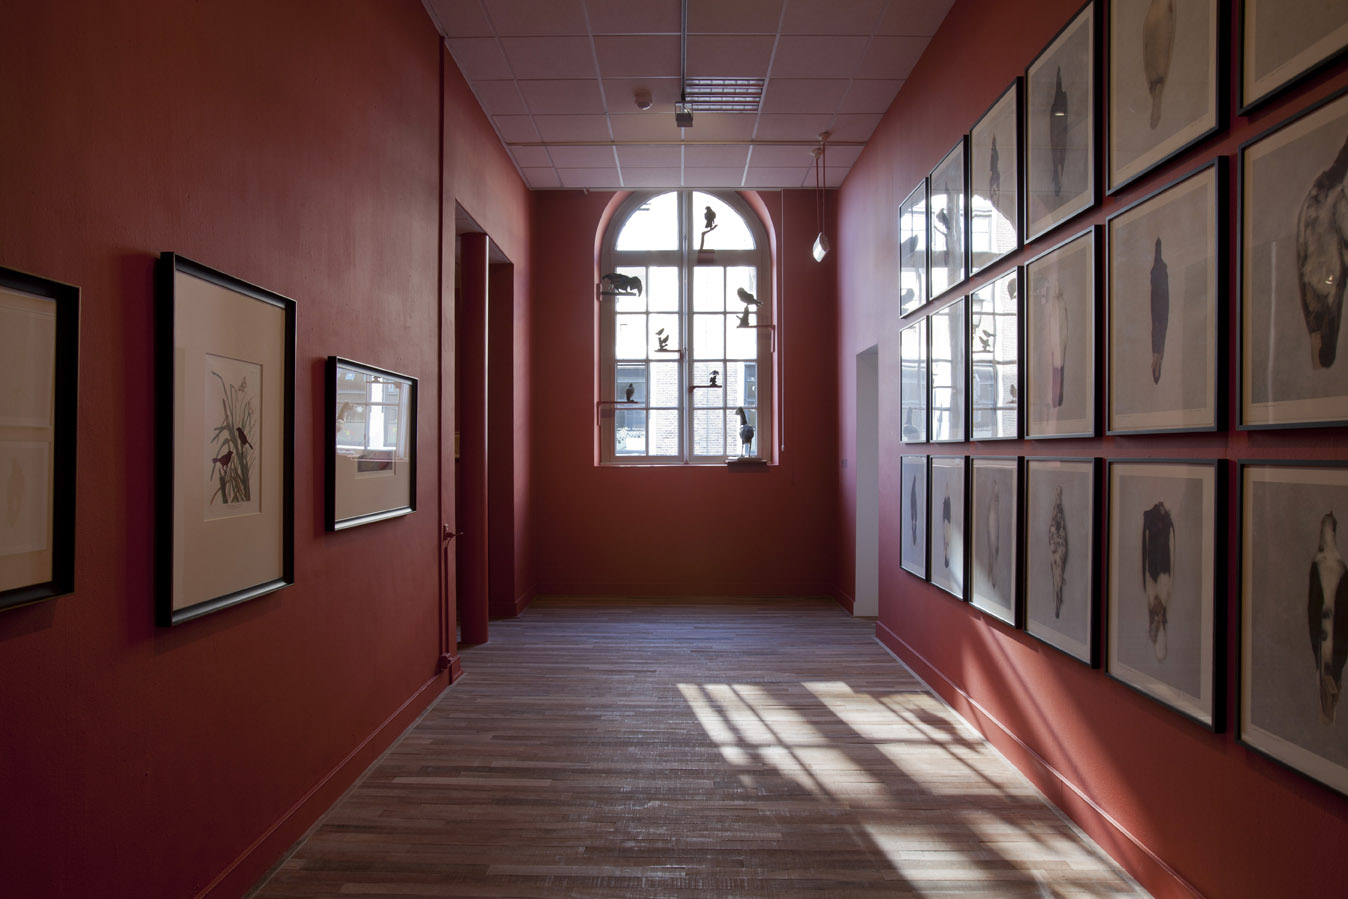 Apparitions, Brandon Ballengée, Museum Het Domein, 2014.